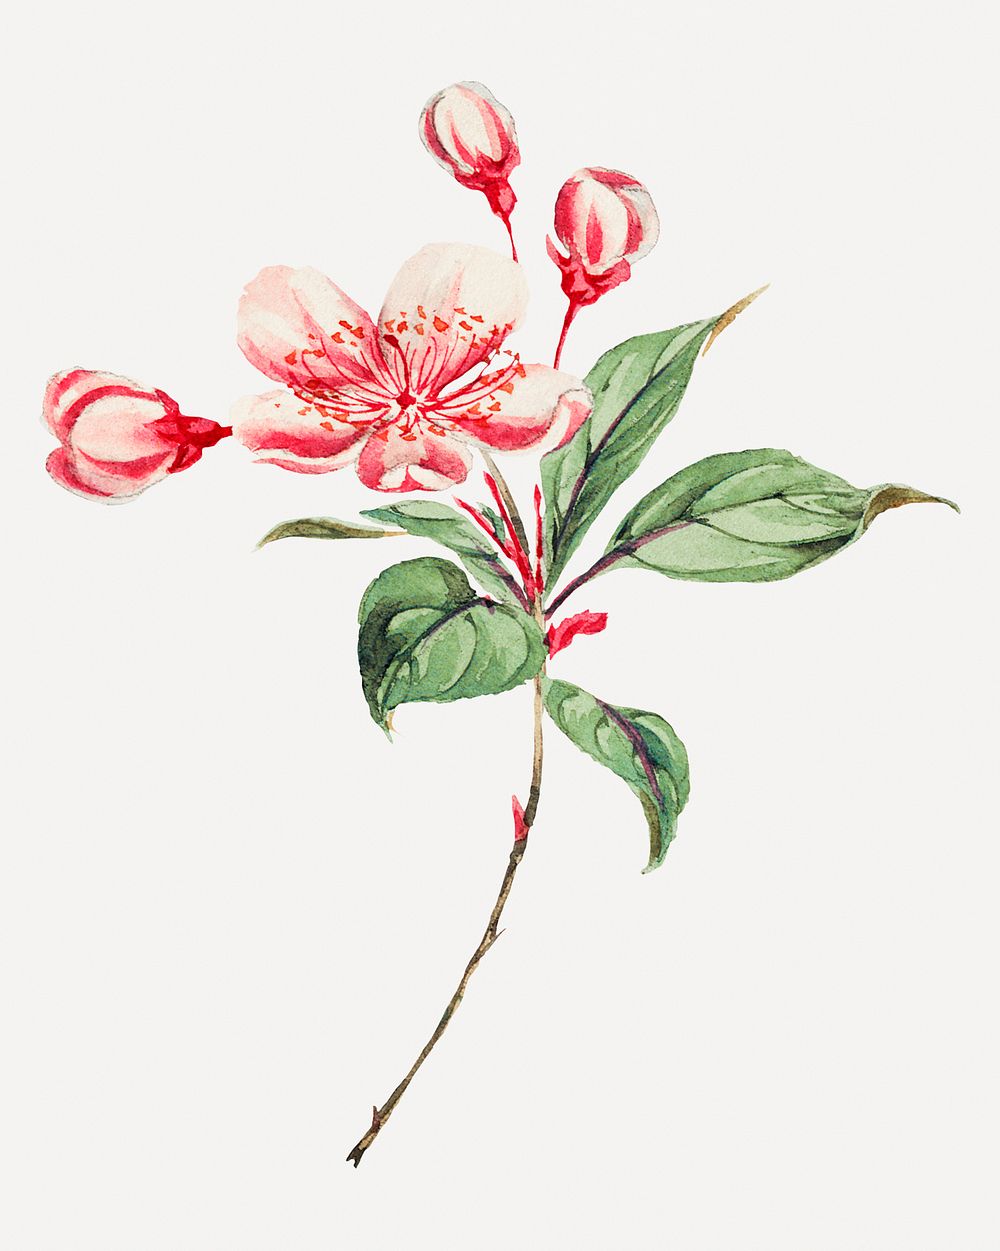 Vintage Japanese azalea flowers art print, remix from artworks by Megata Morikaga